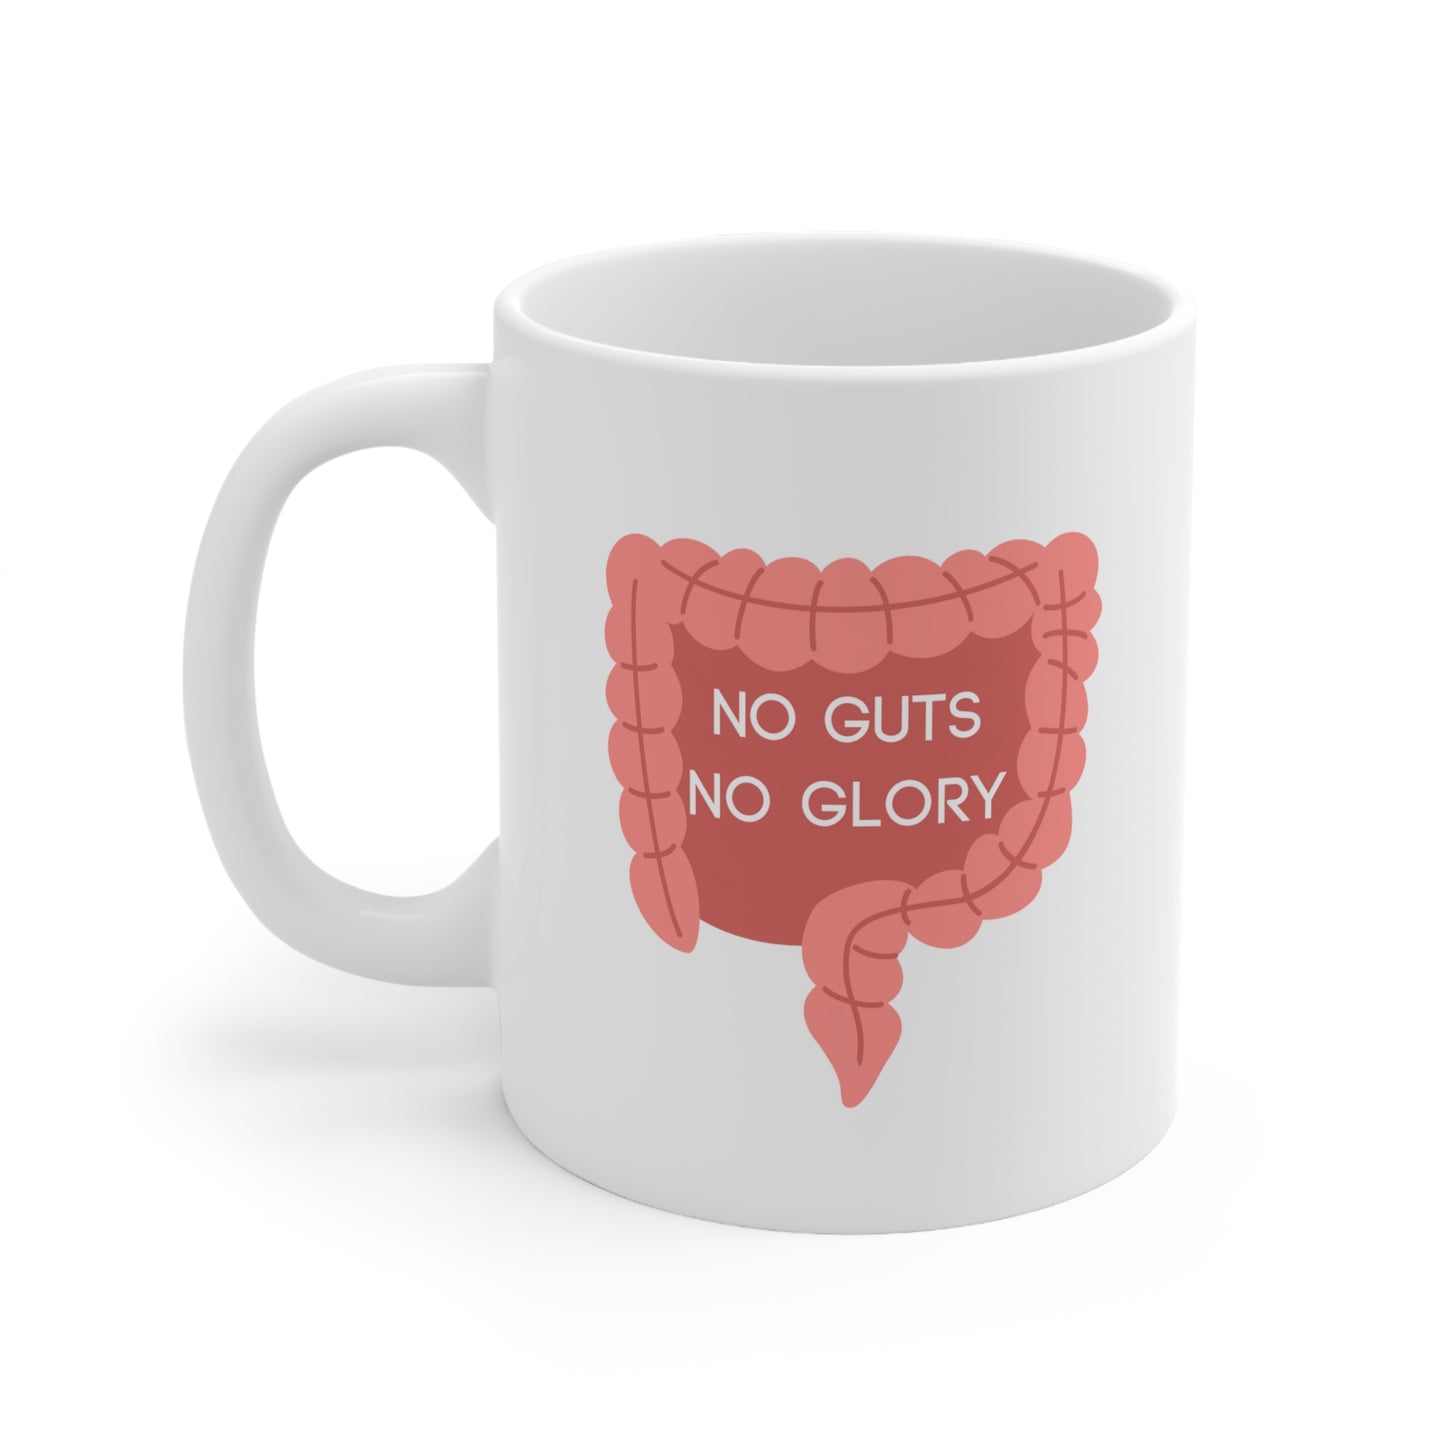 No guts no glory mug, Colorectal mug, Colon surgery, GI doctor, colorectal humor, medical humor, doctor gift, endoscopy, colonoscopy, MD gift